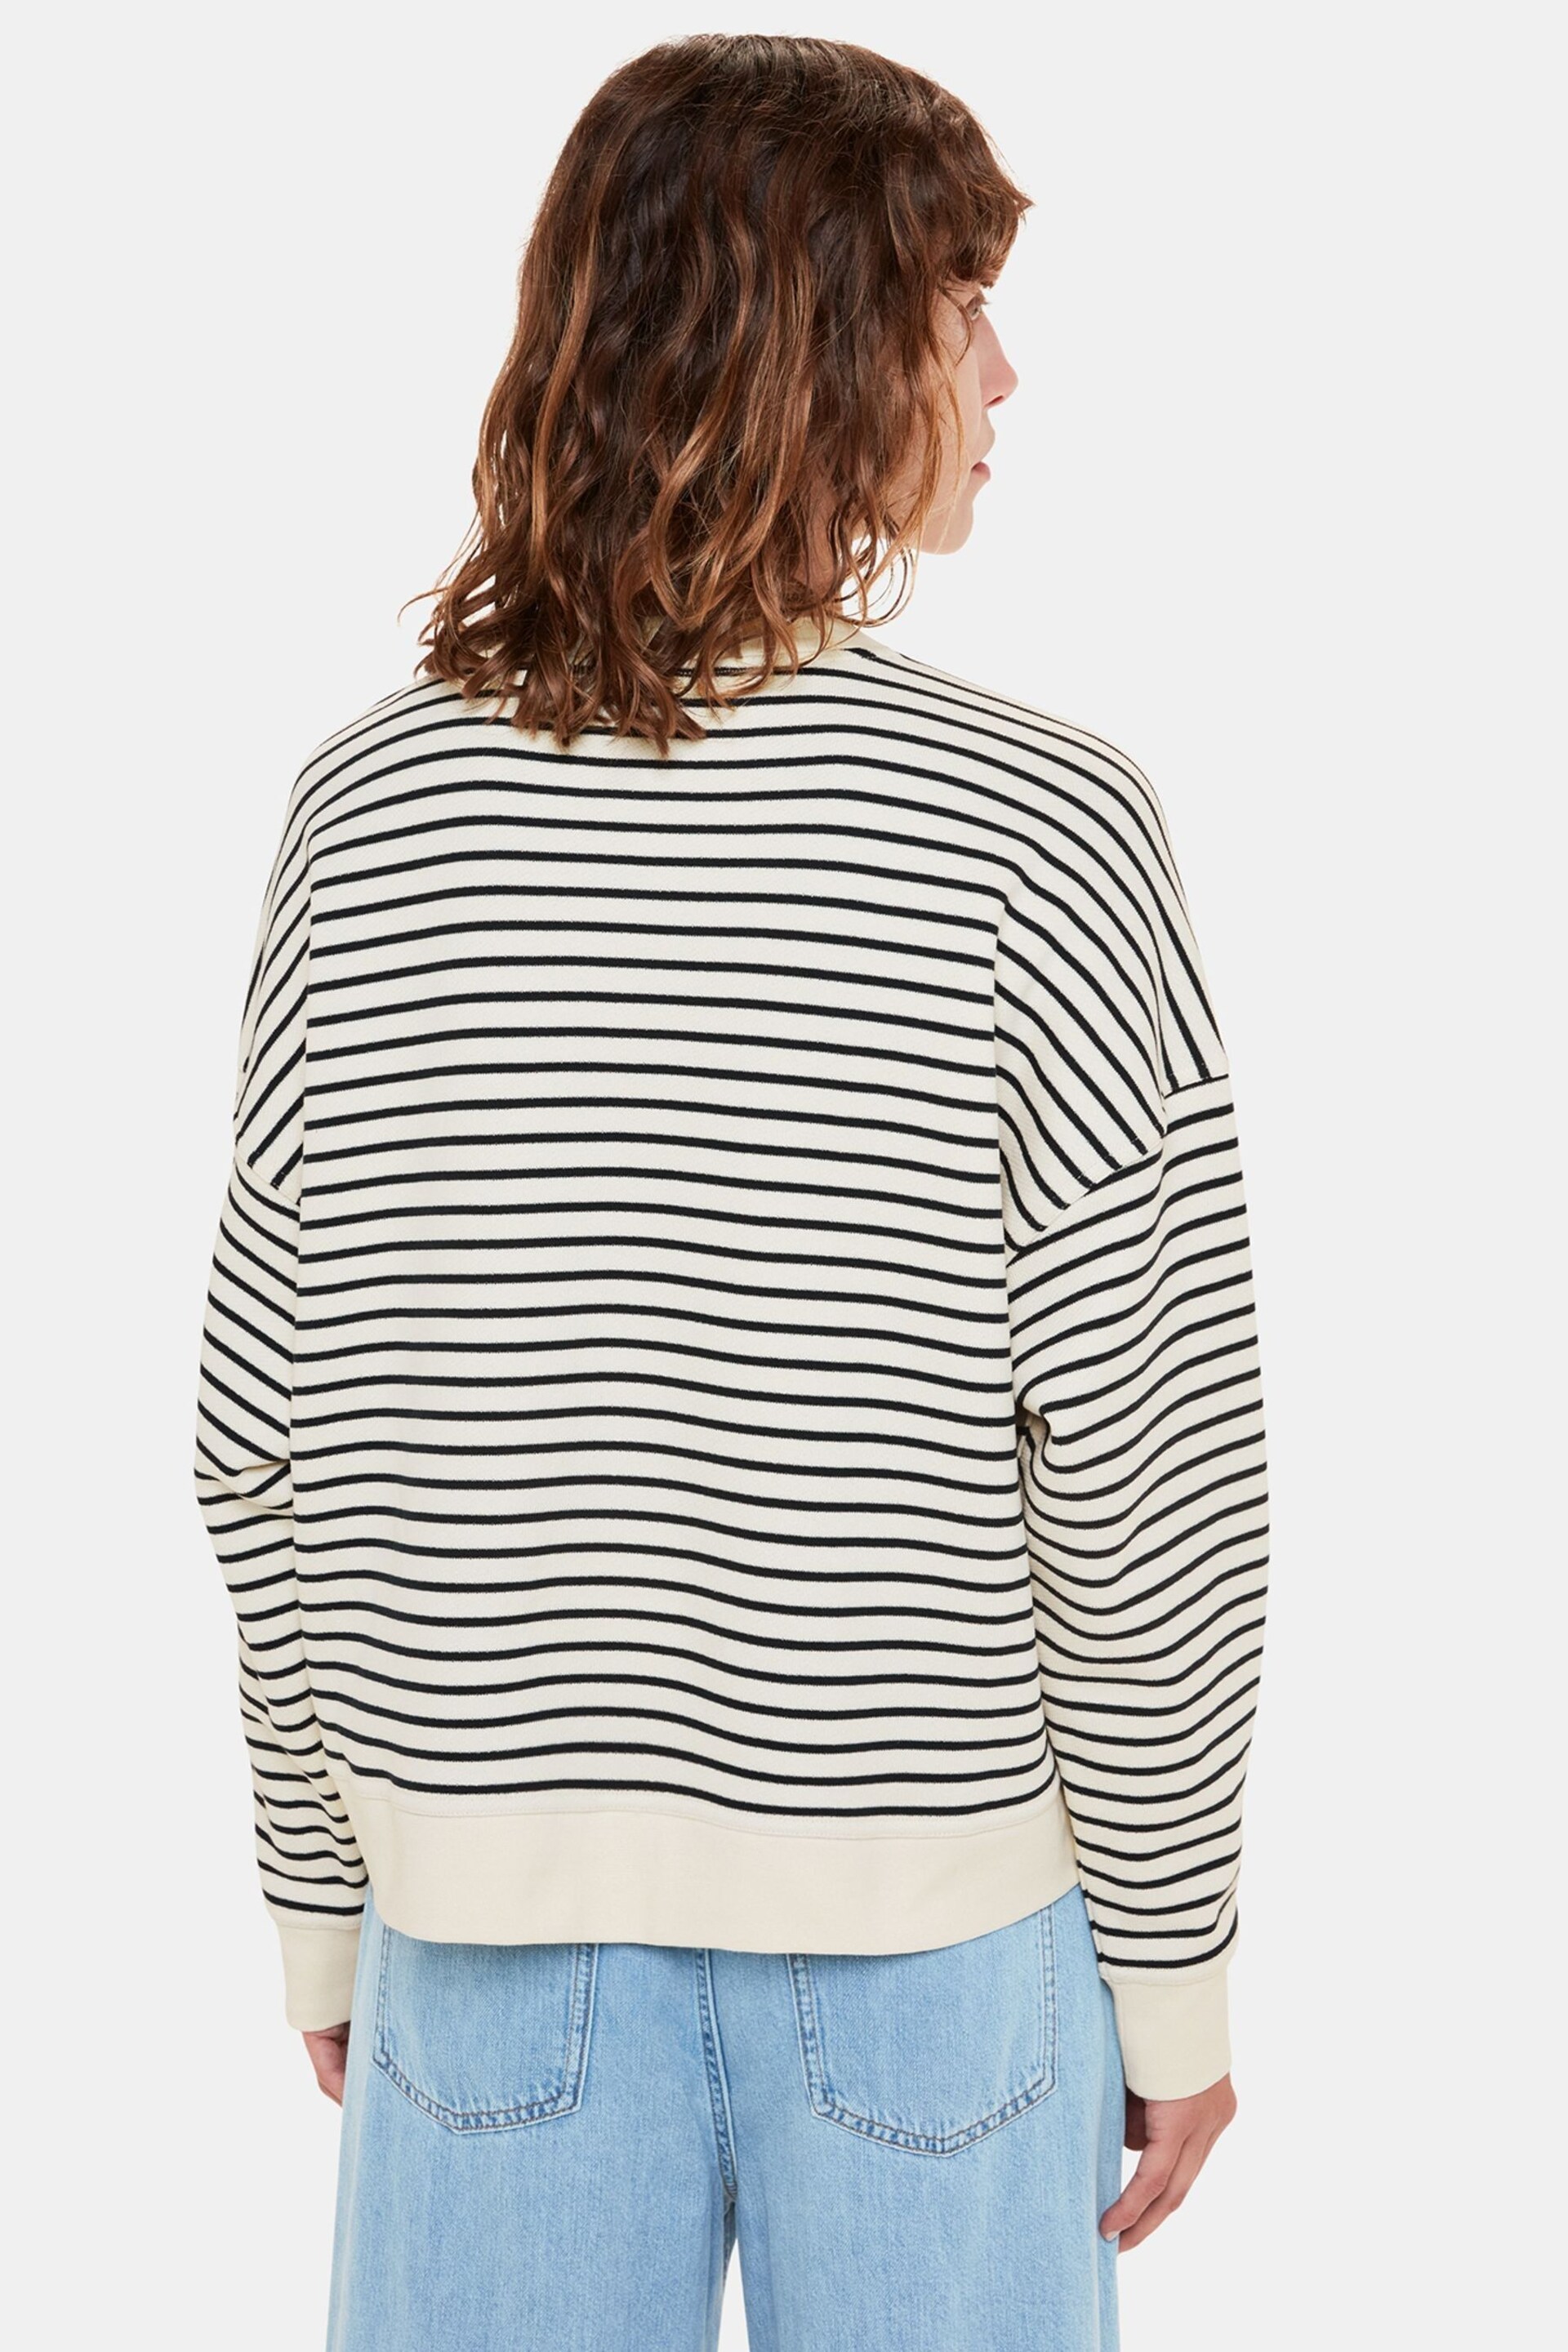 Whistles Stripe White Sweater - Image 2 of 5